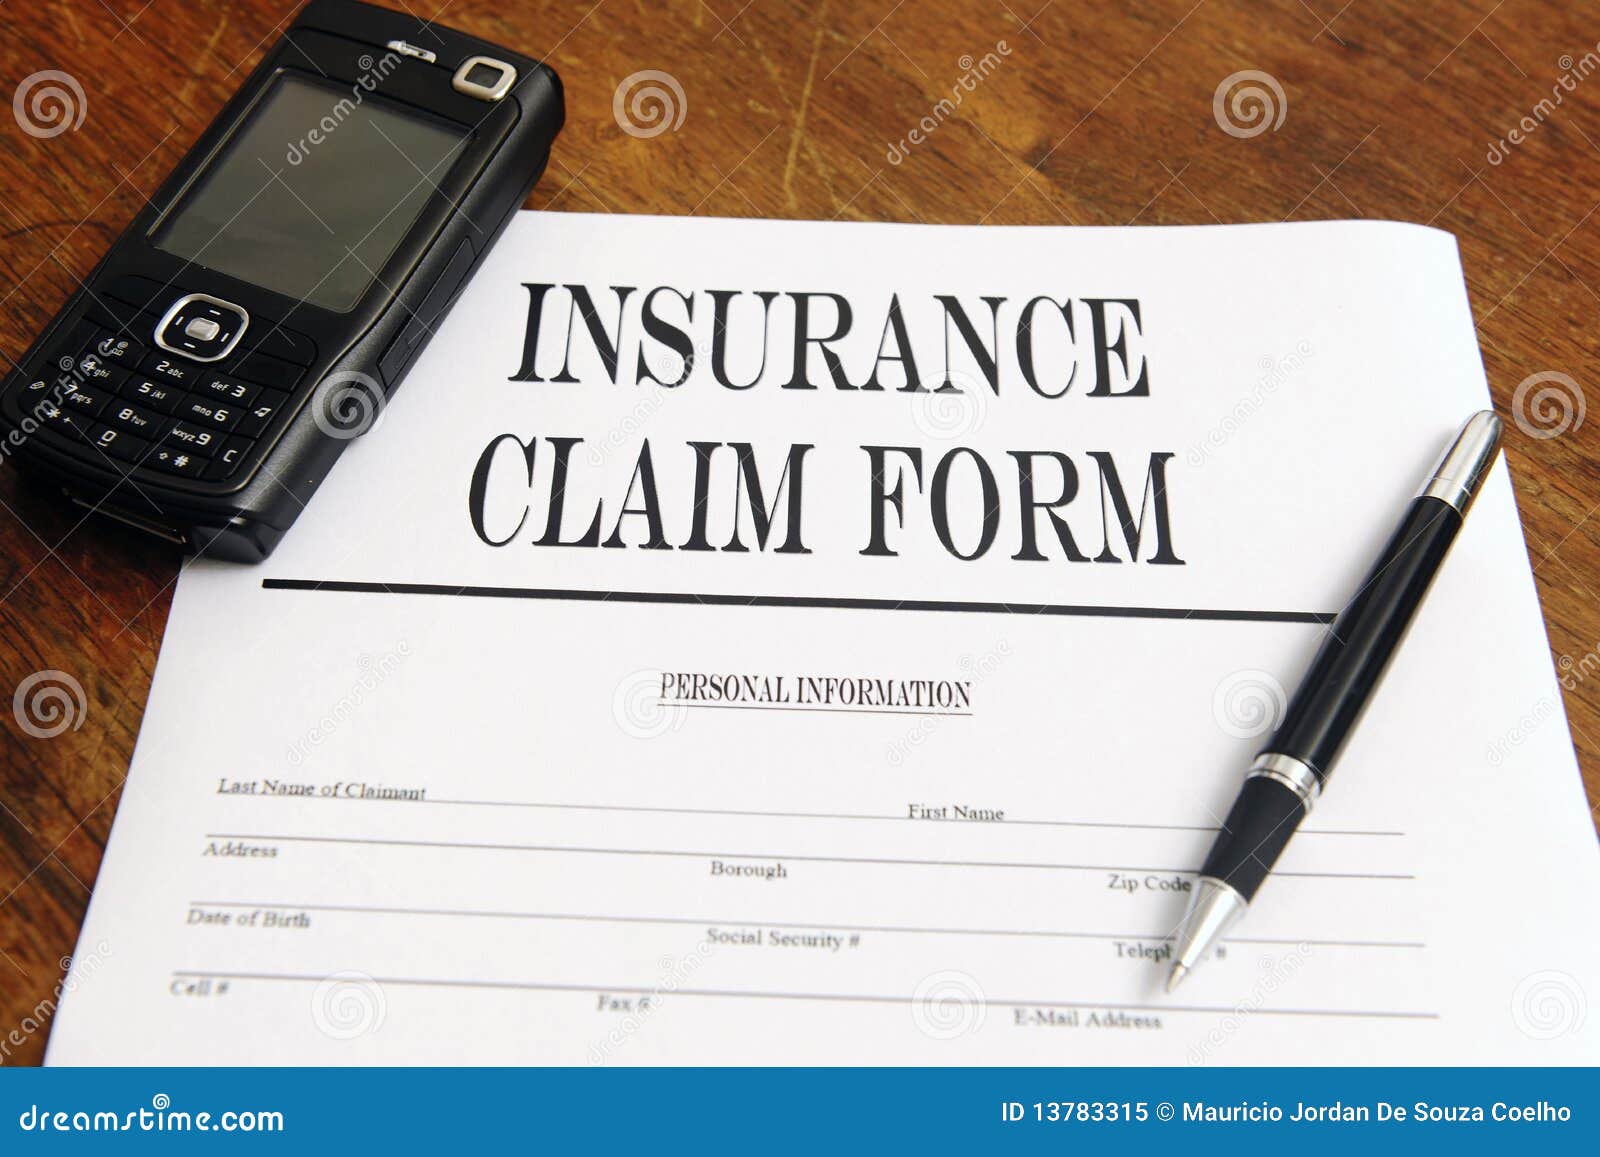 Blank Insurance Claim Form Royalty Free Stock Photo - Image: 13783315